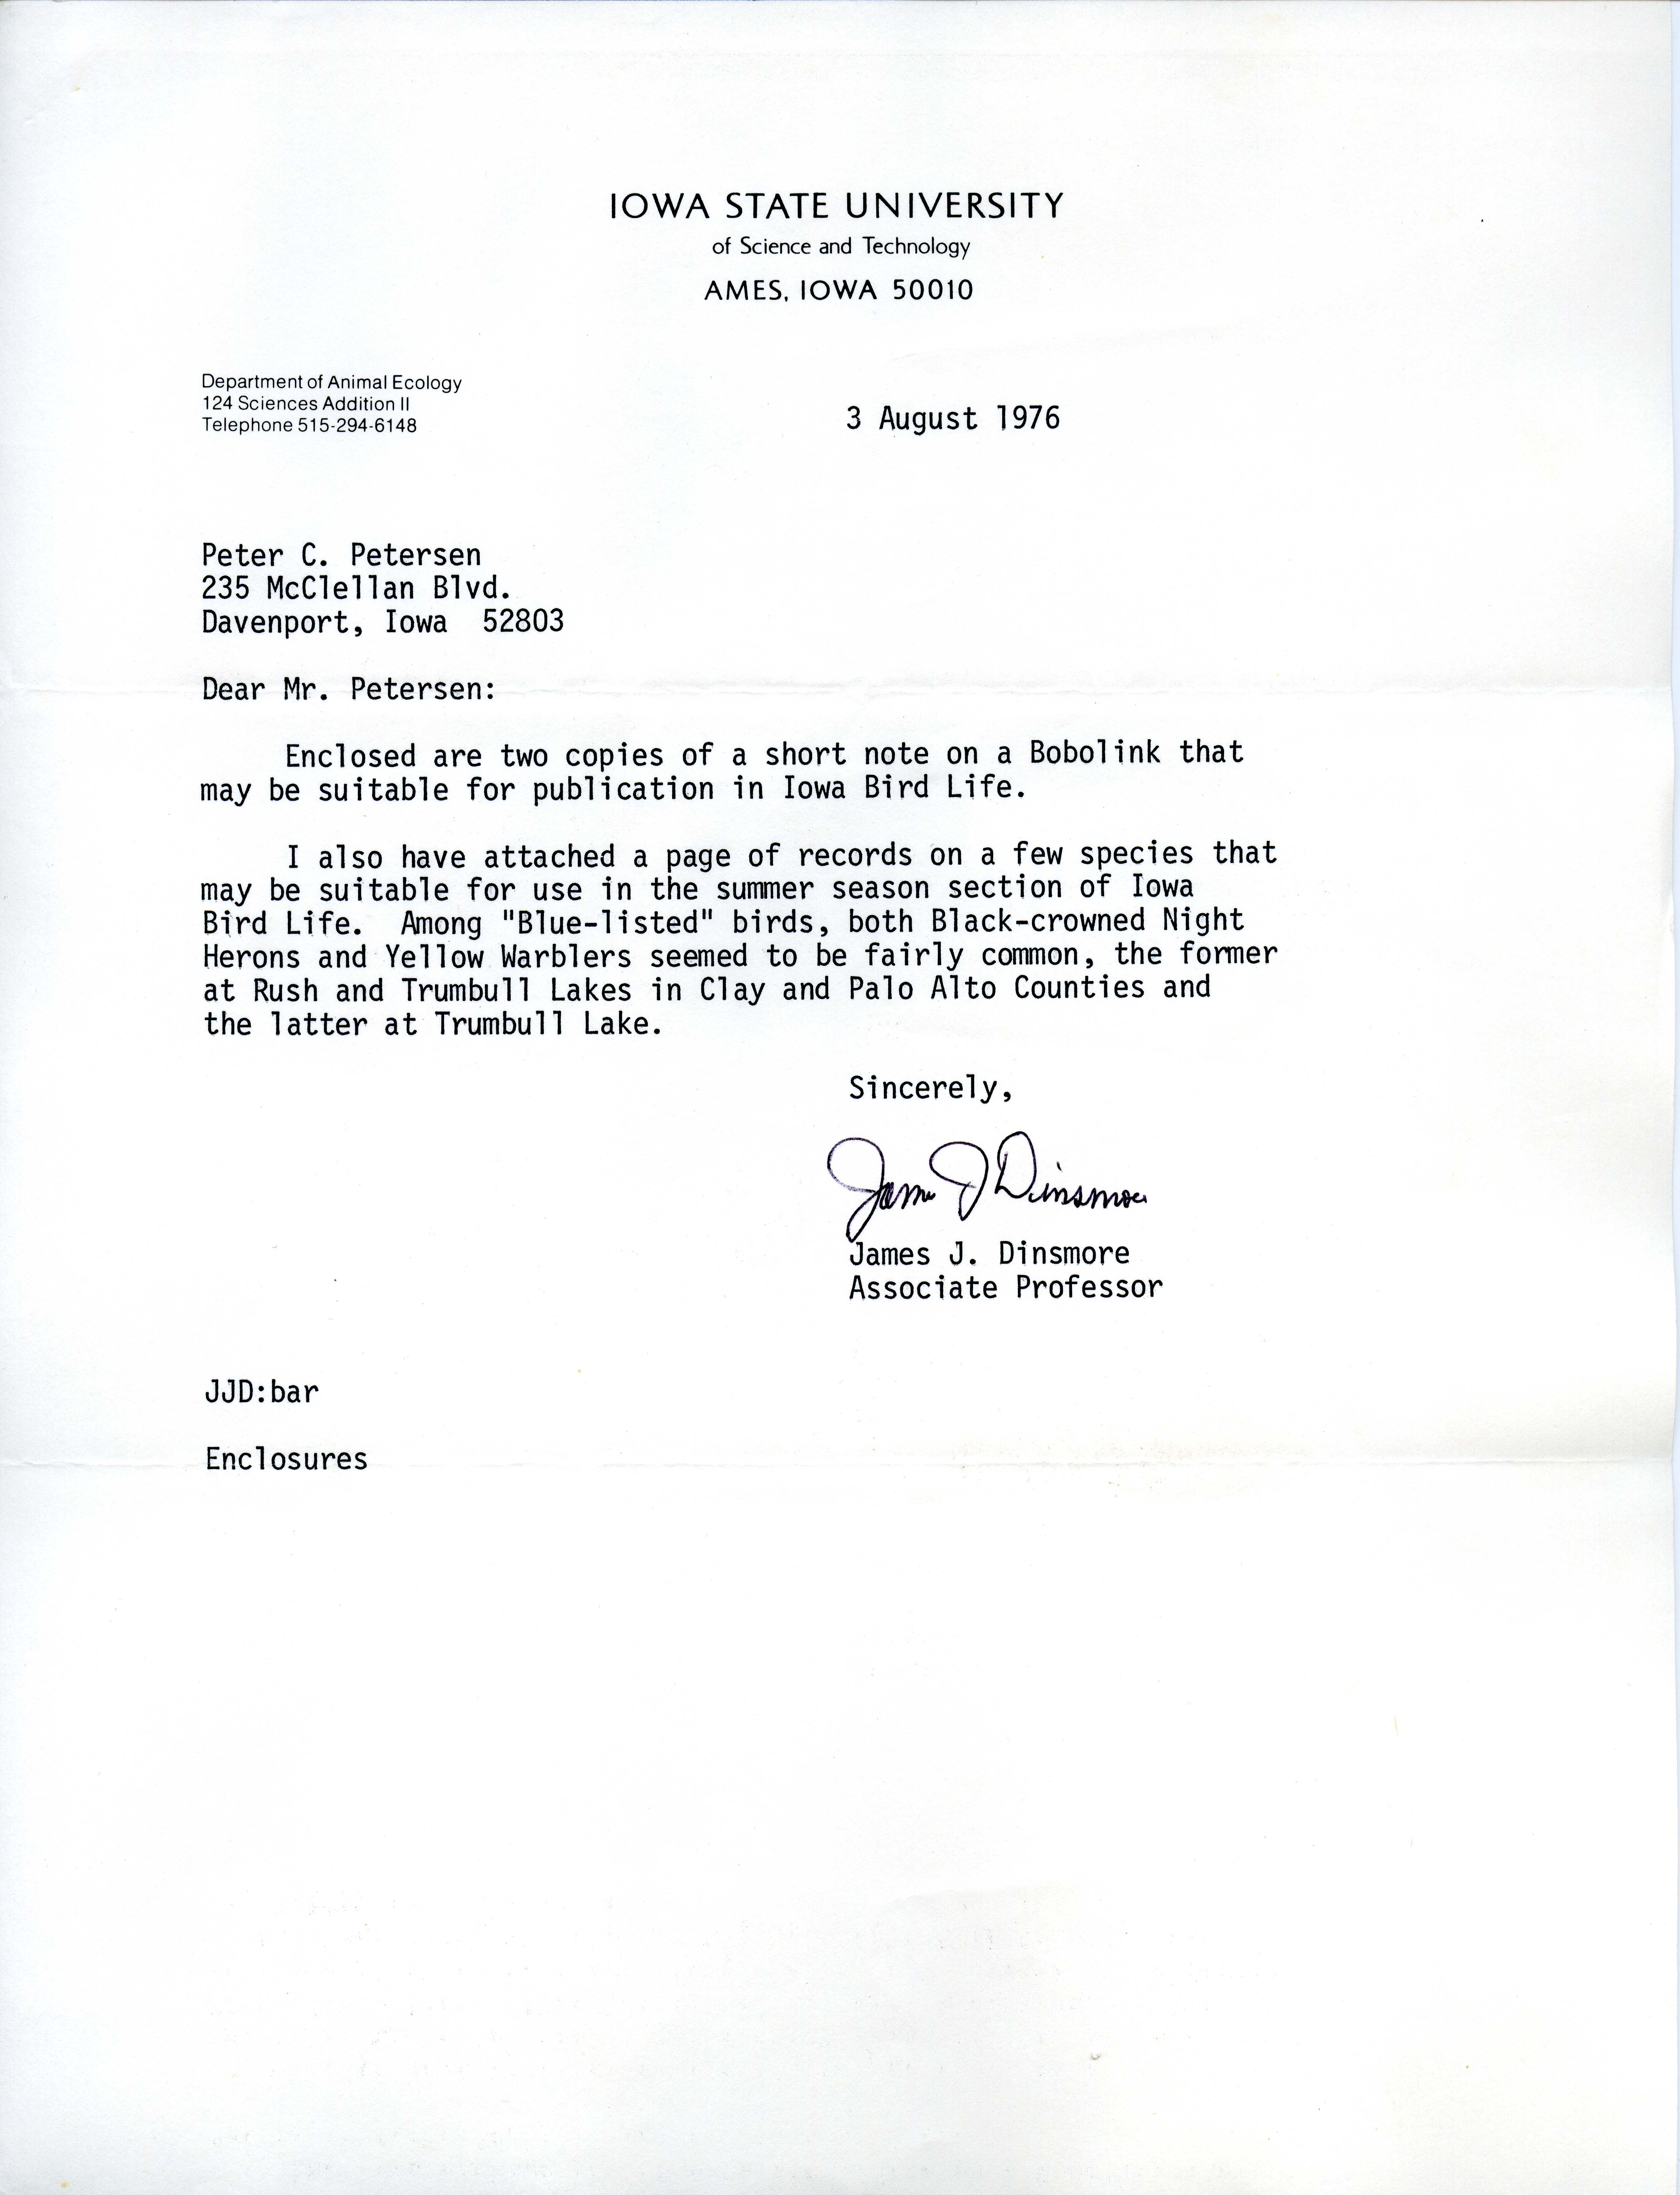 Letter from James J. Dinsmore to Peter C. Petersen  regarding bird sightings, August 3, 1976